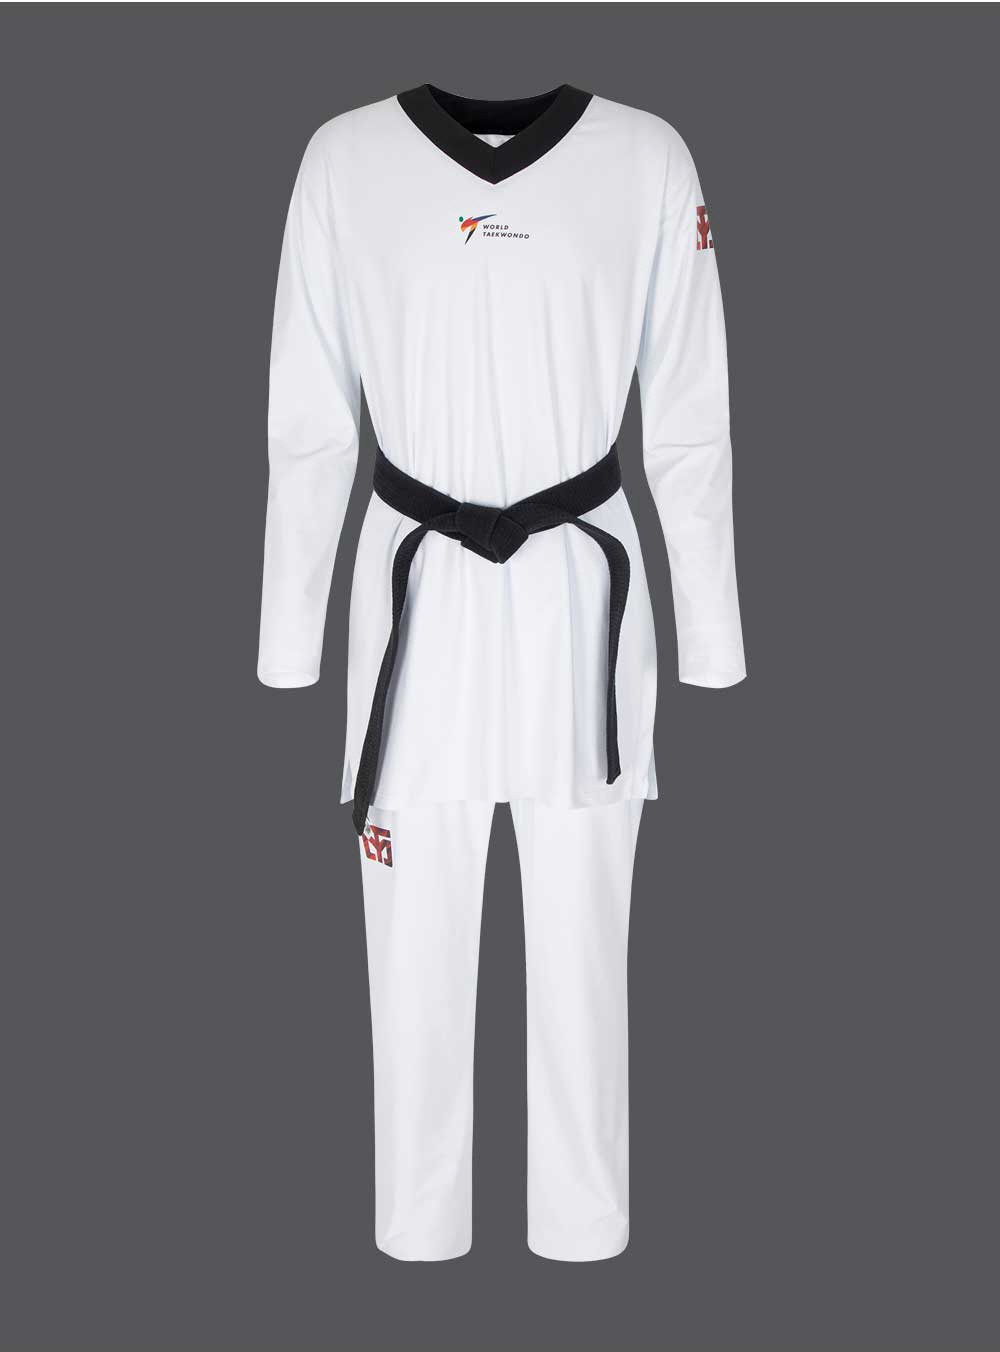 MOOTO EXTERA-7 Olympic Uniform